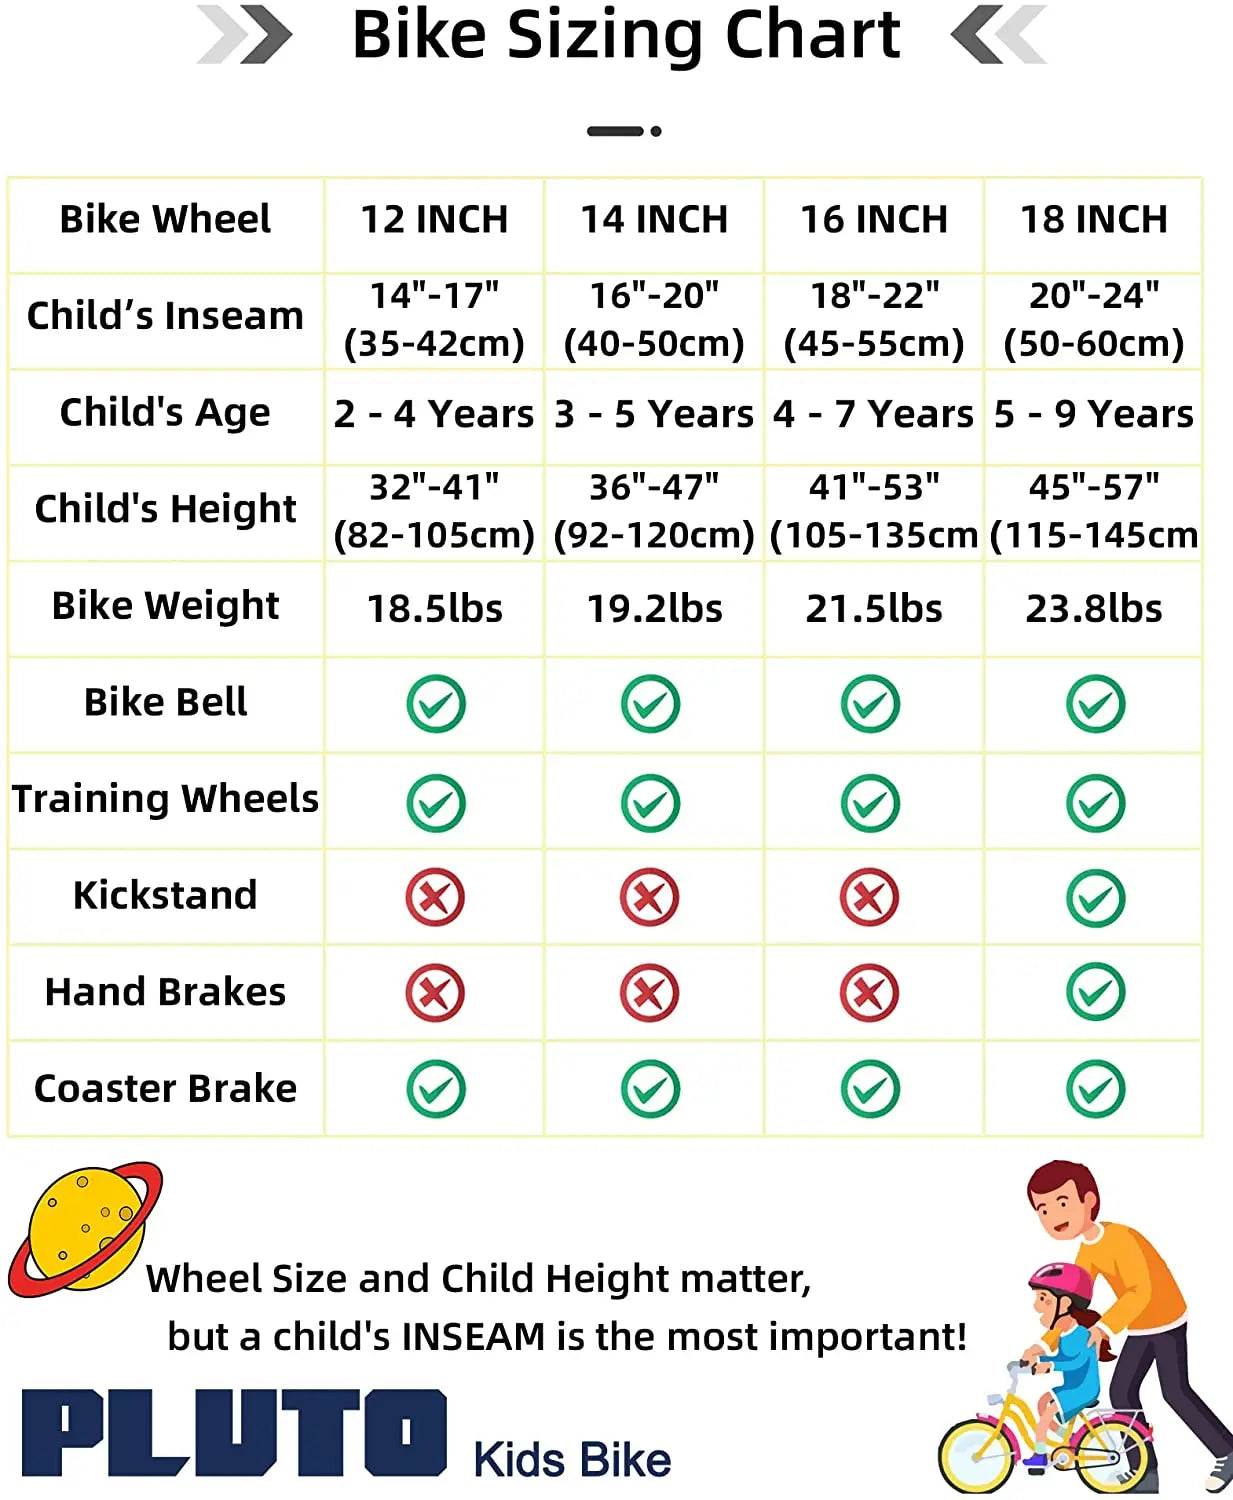 JOYSTAR Pluto Kids Bike for 2-13 Year Old Boys & Girls with Training Wheels